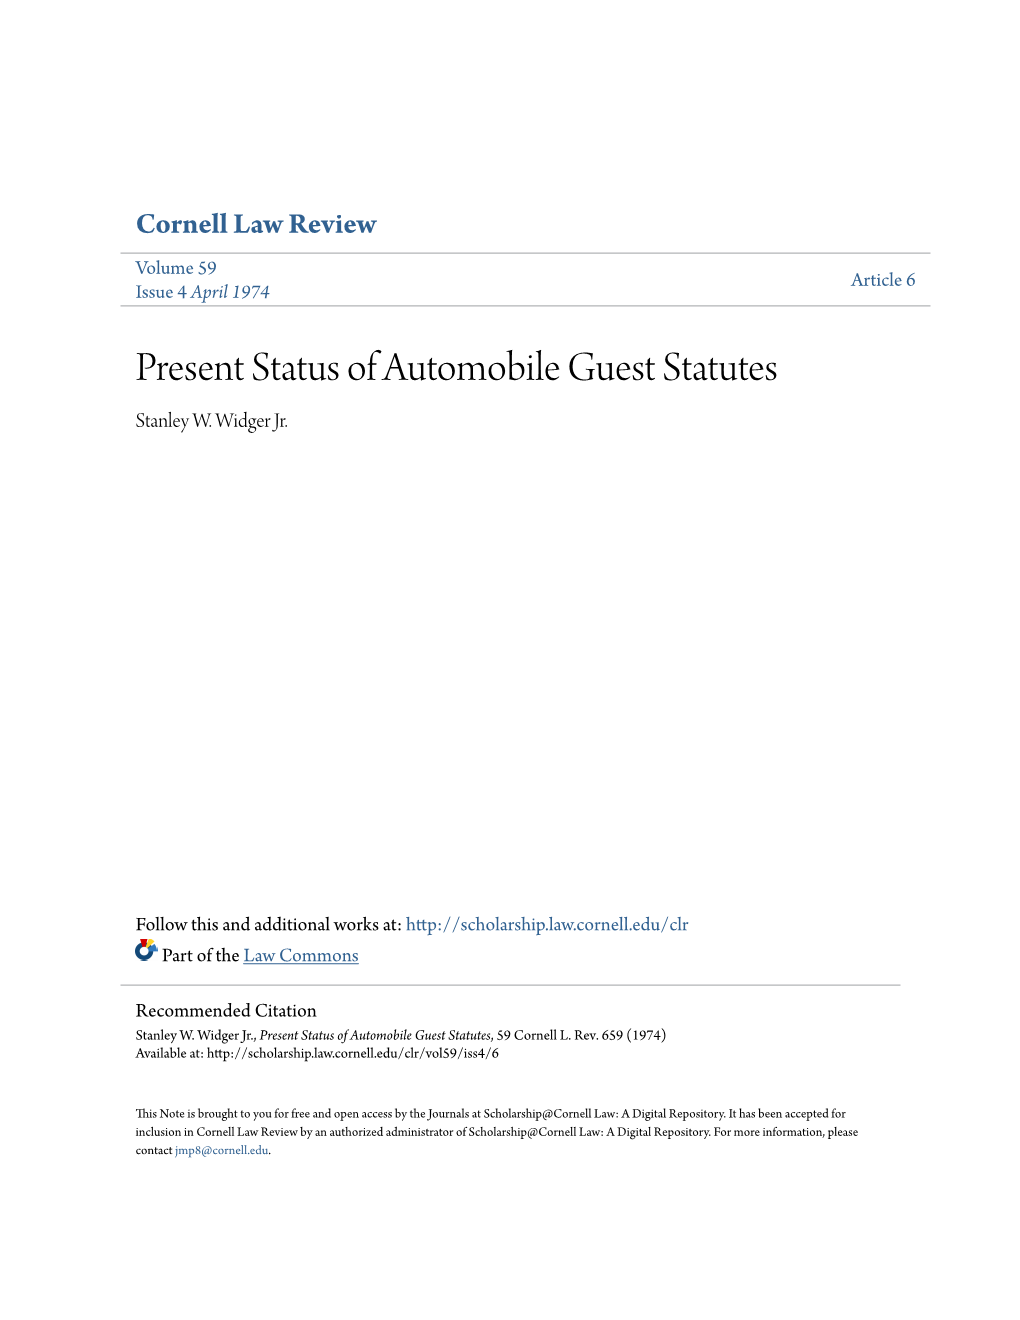 Present Status of Automobile Guest Statutes Stanley W